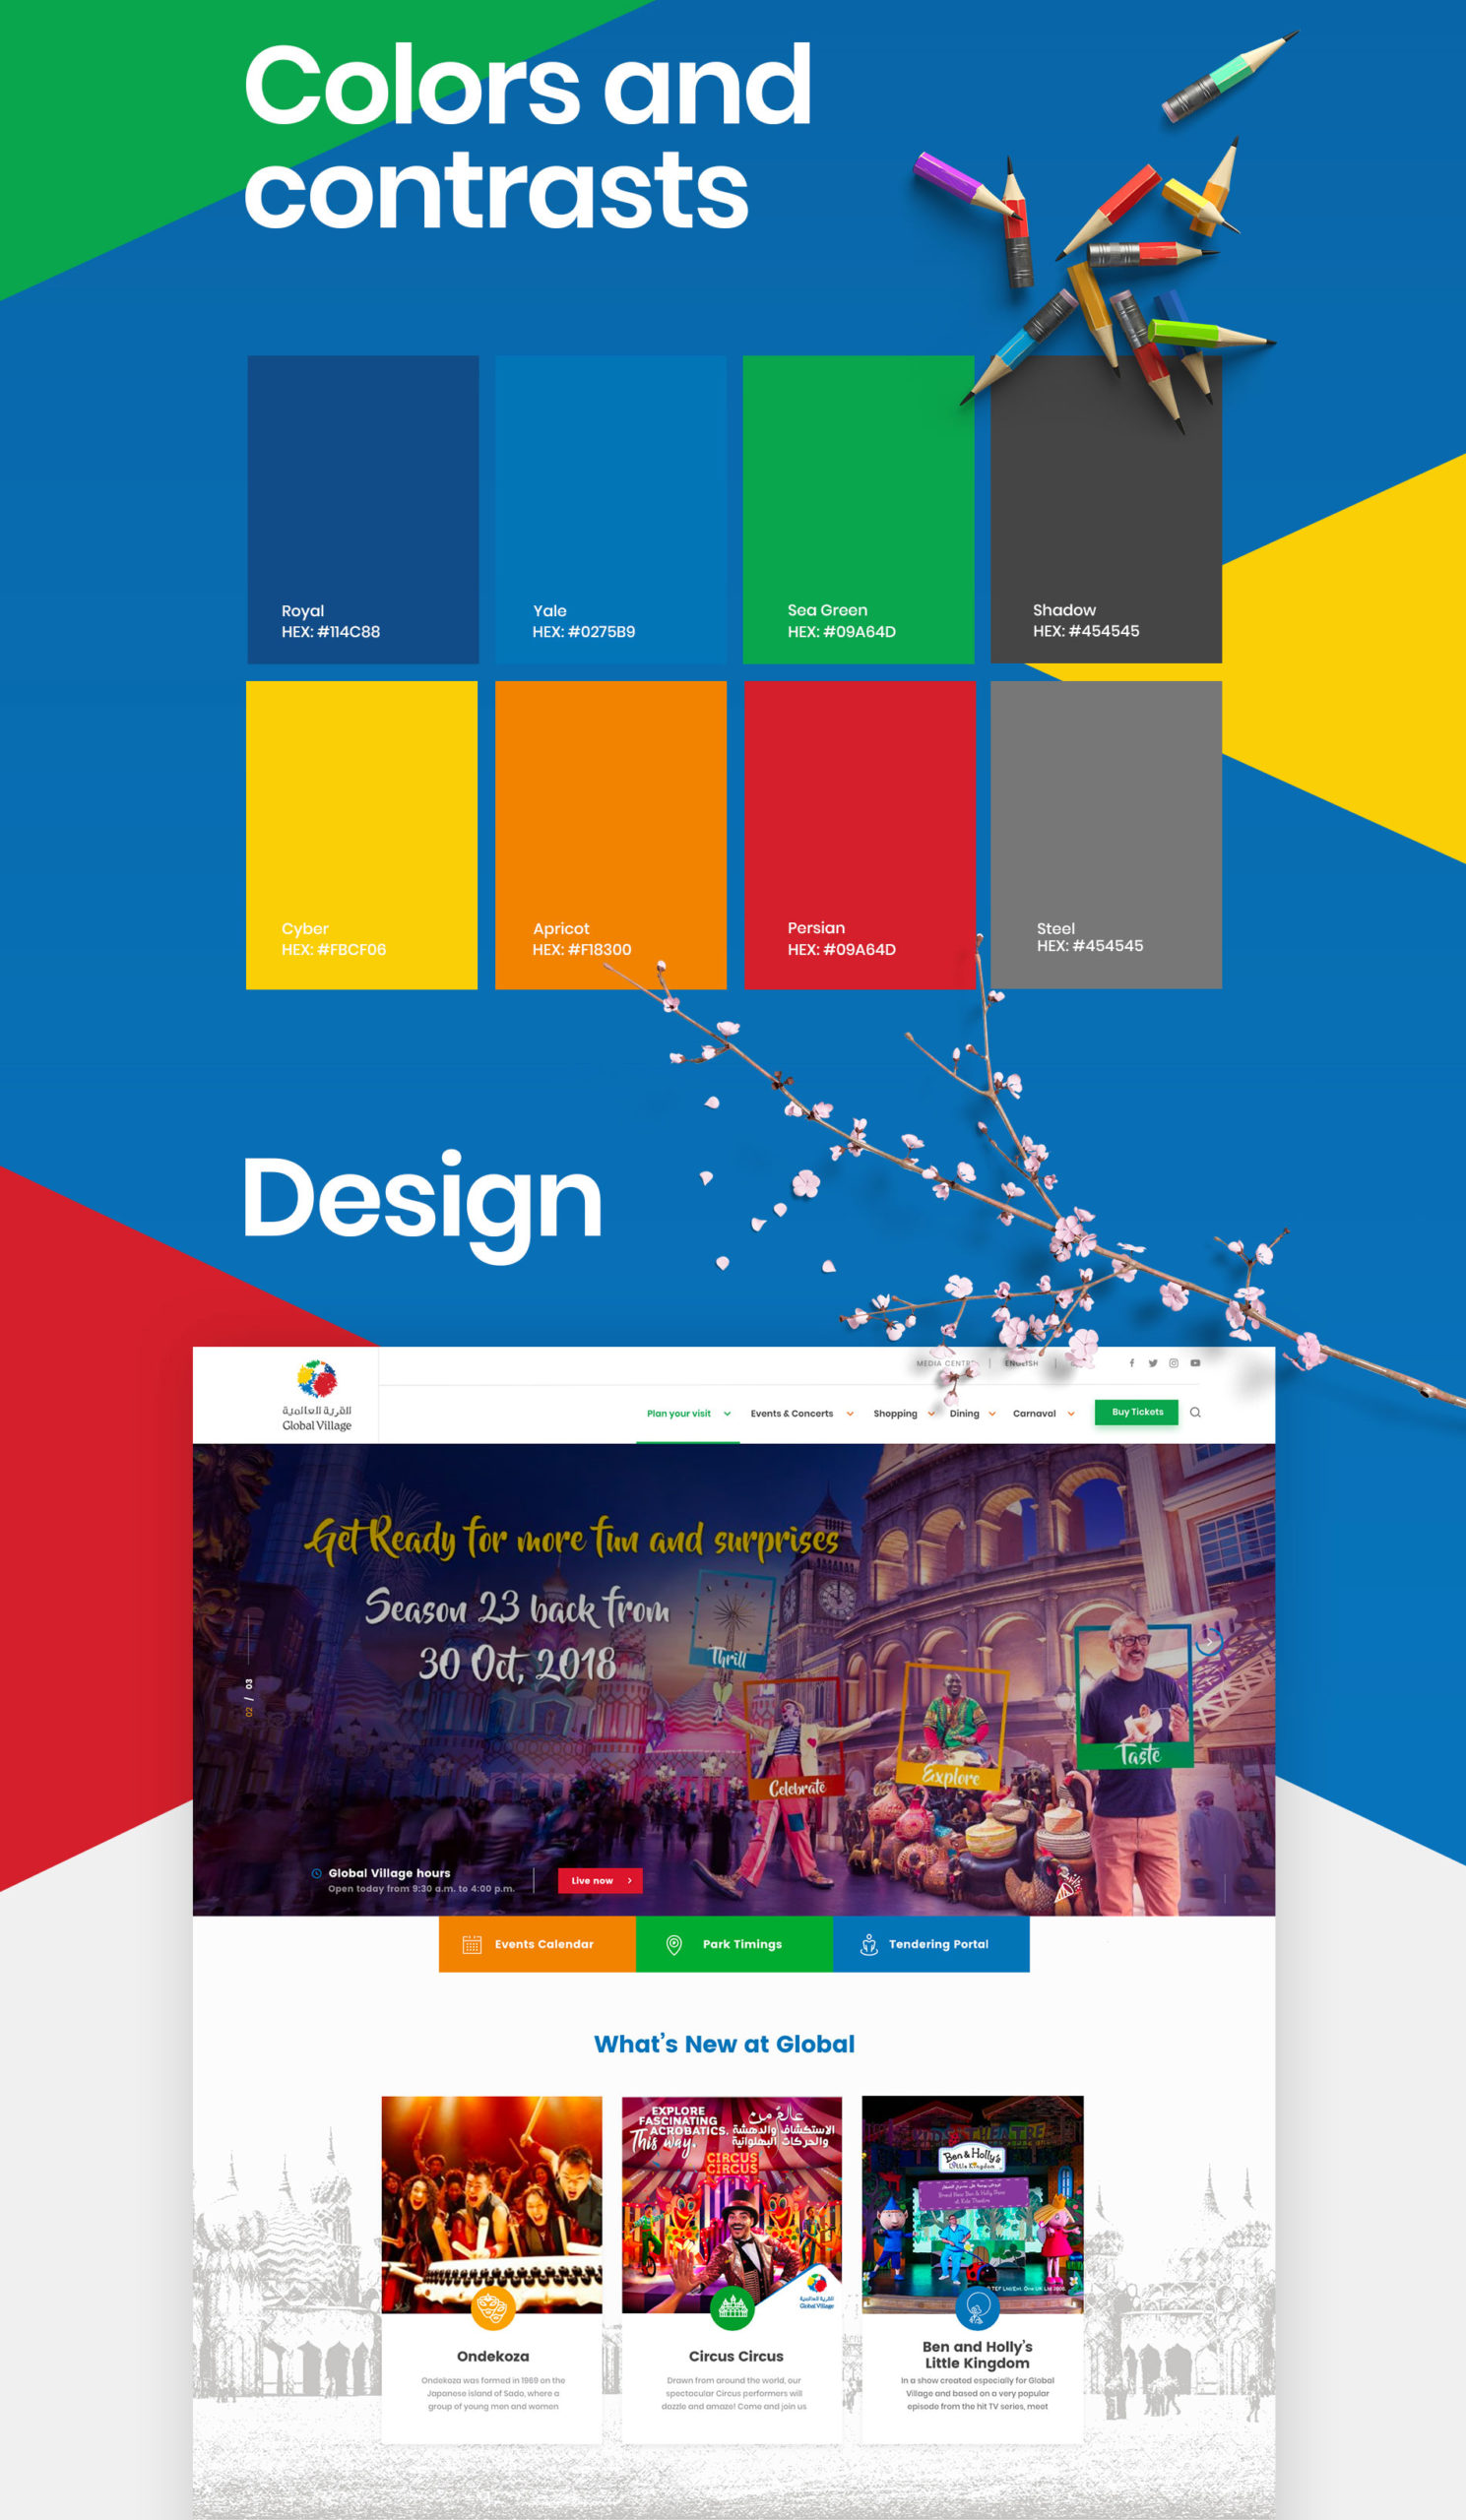 Global Village Dubai Web Design Agency